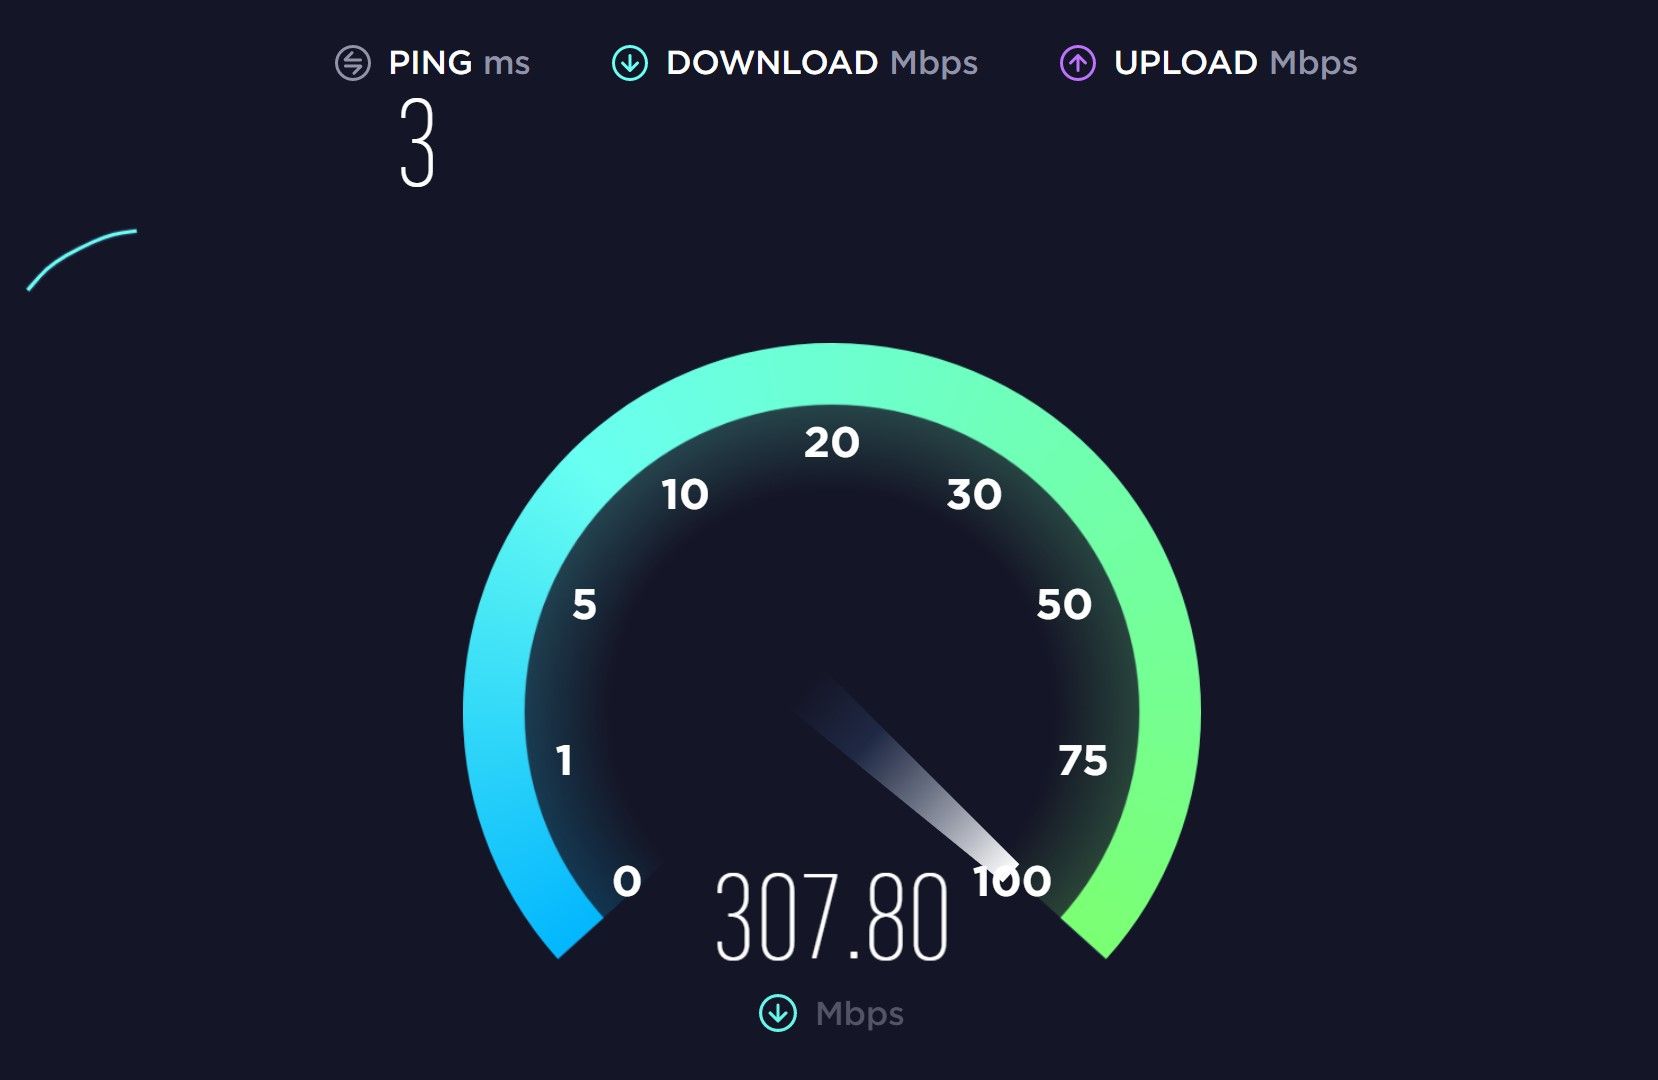 Internet connection speed test